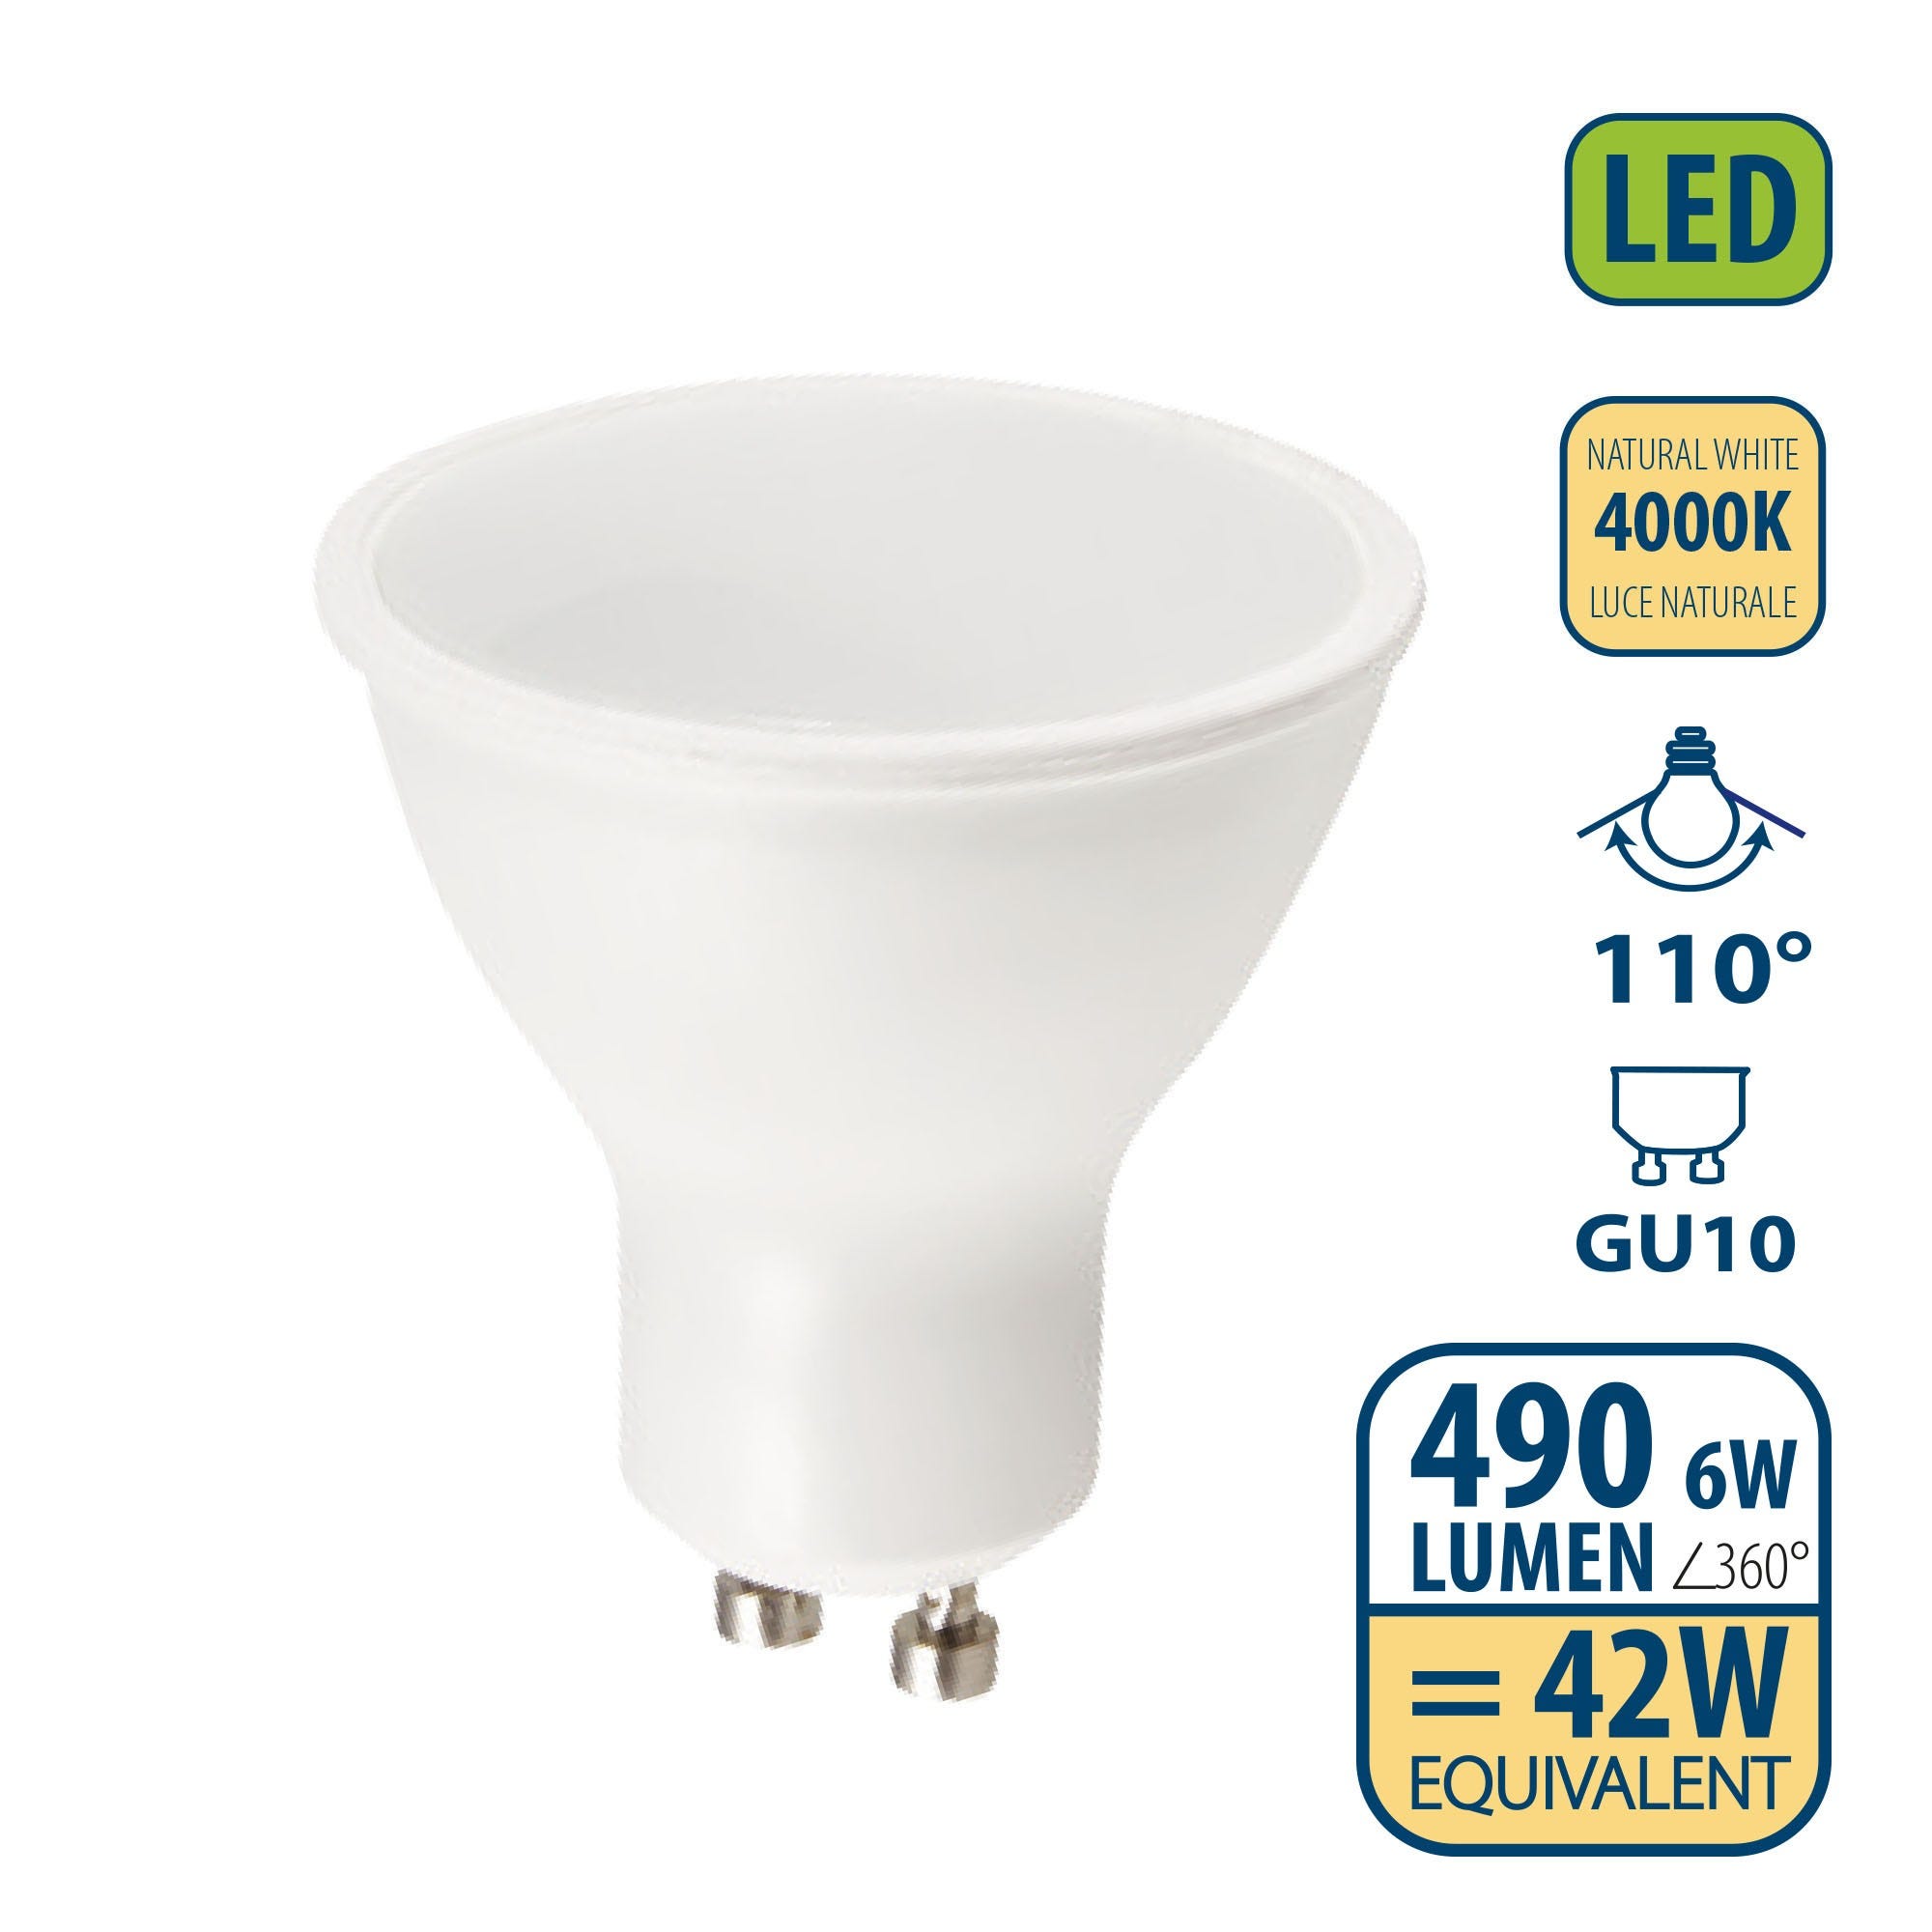 Lampadina SMD LED, Spot attacco GU10, 230V, 6W/490lm, 4000K, 110°